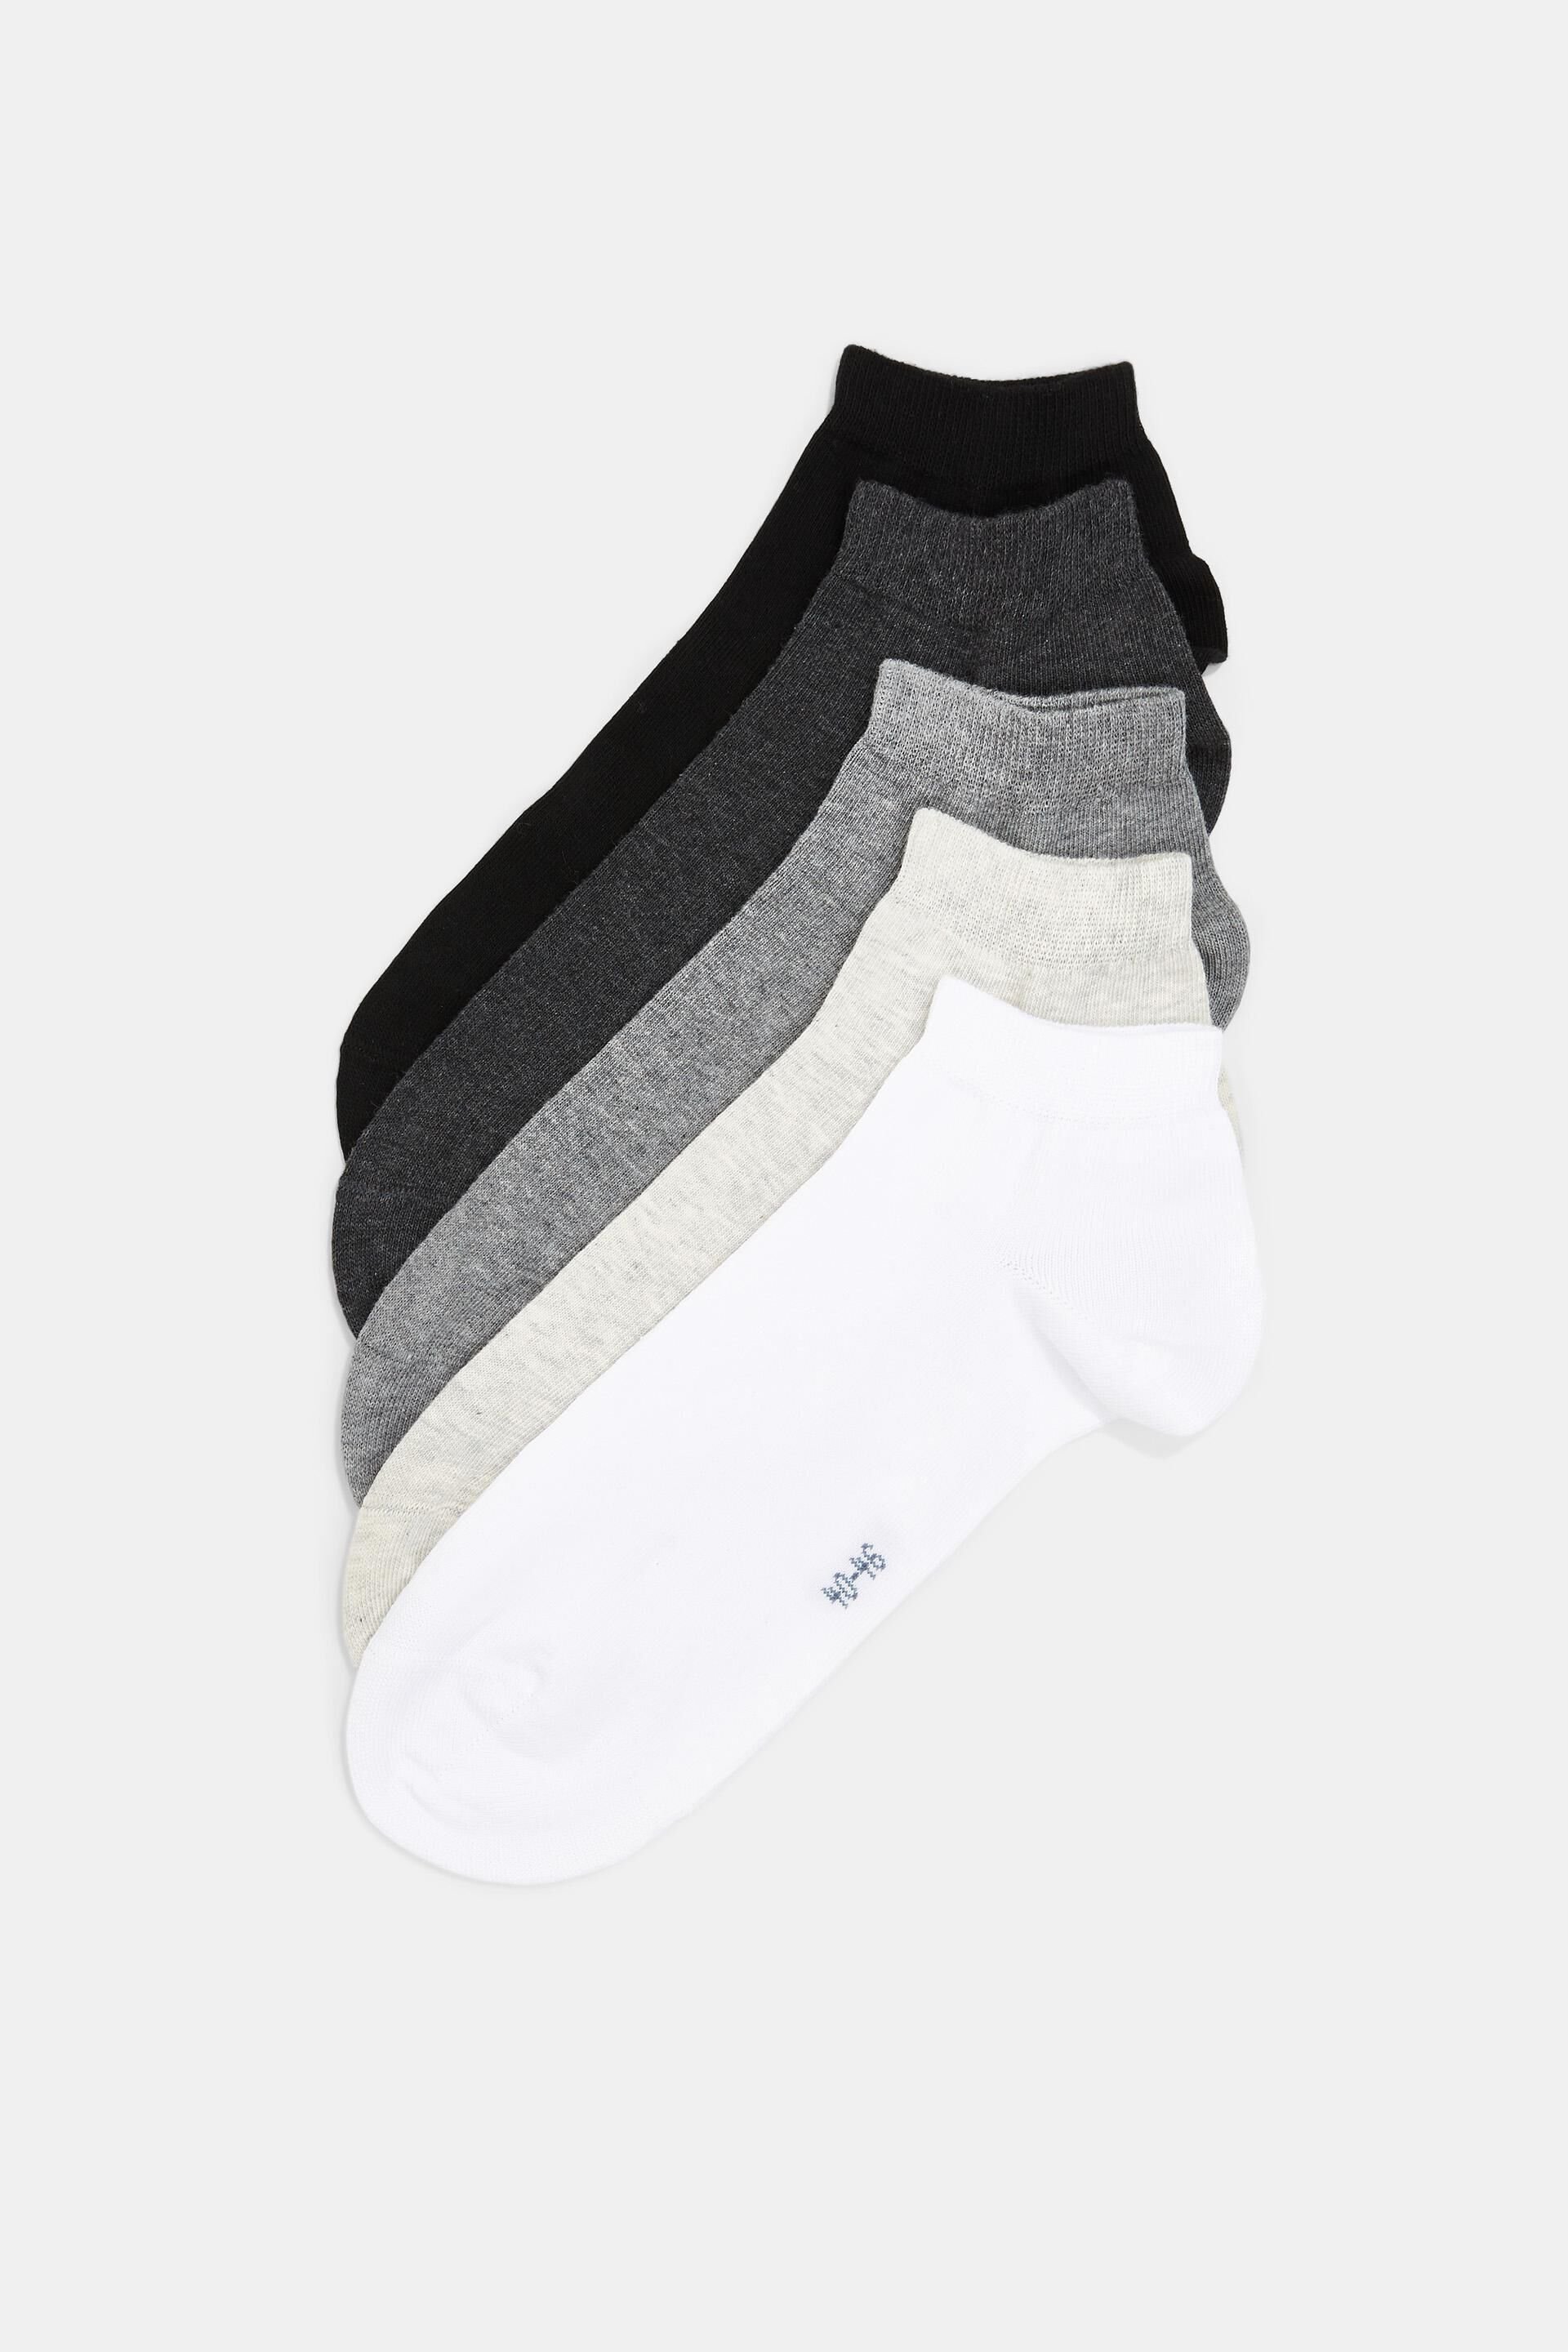 Esprit cotton sneaker socks, of organic 5-pack